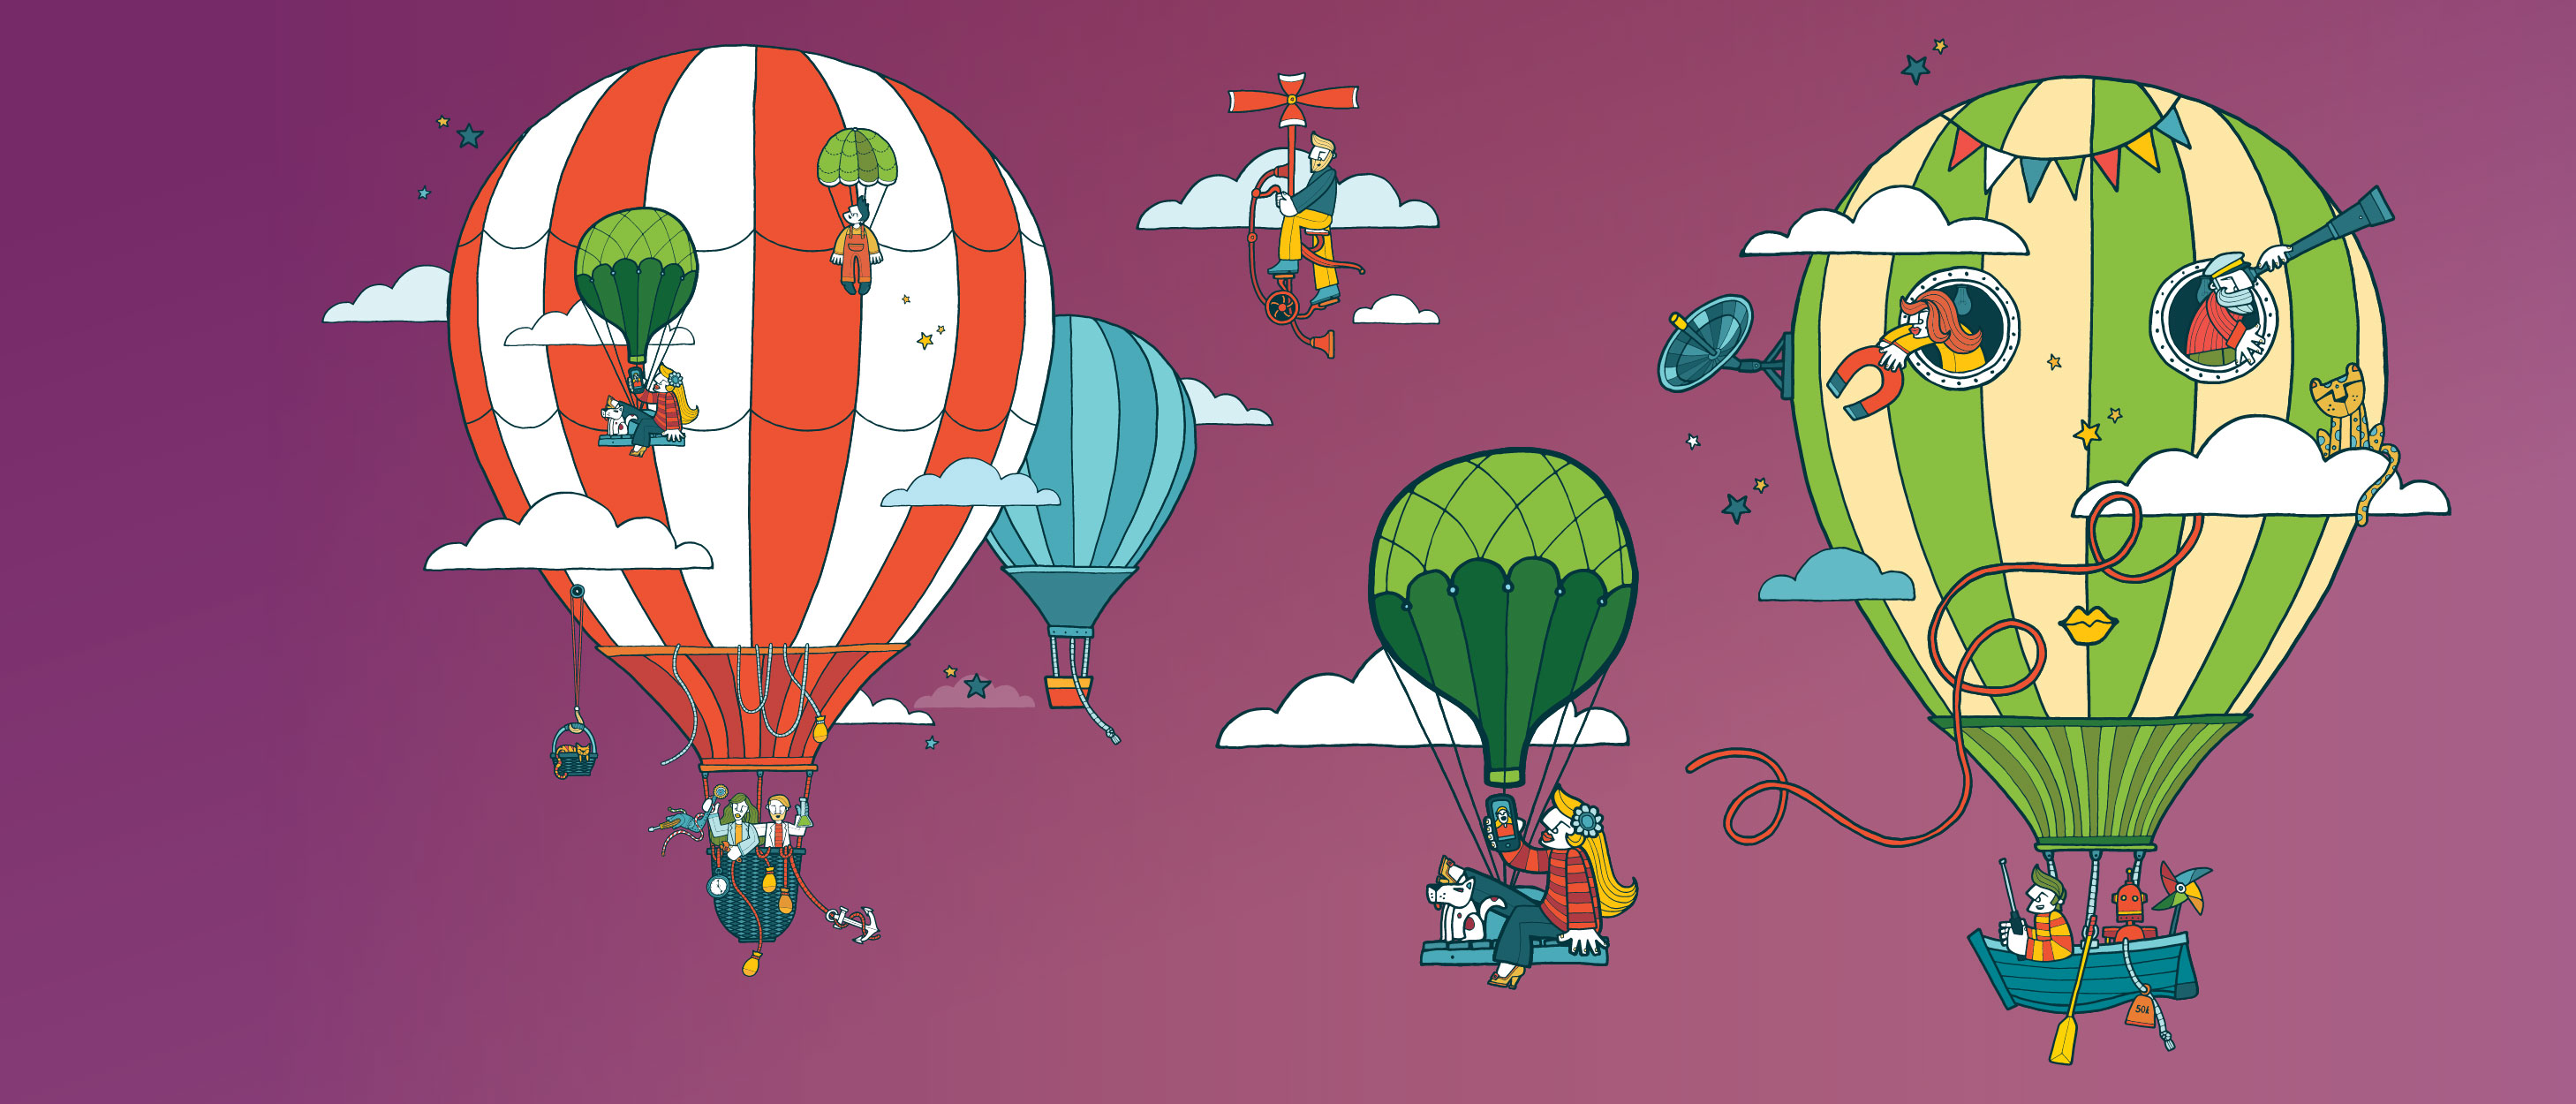 Cartoon image of 4 large hot air balloons. 